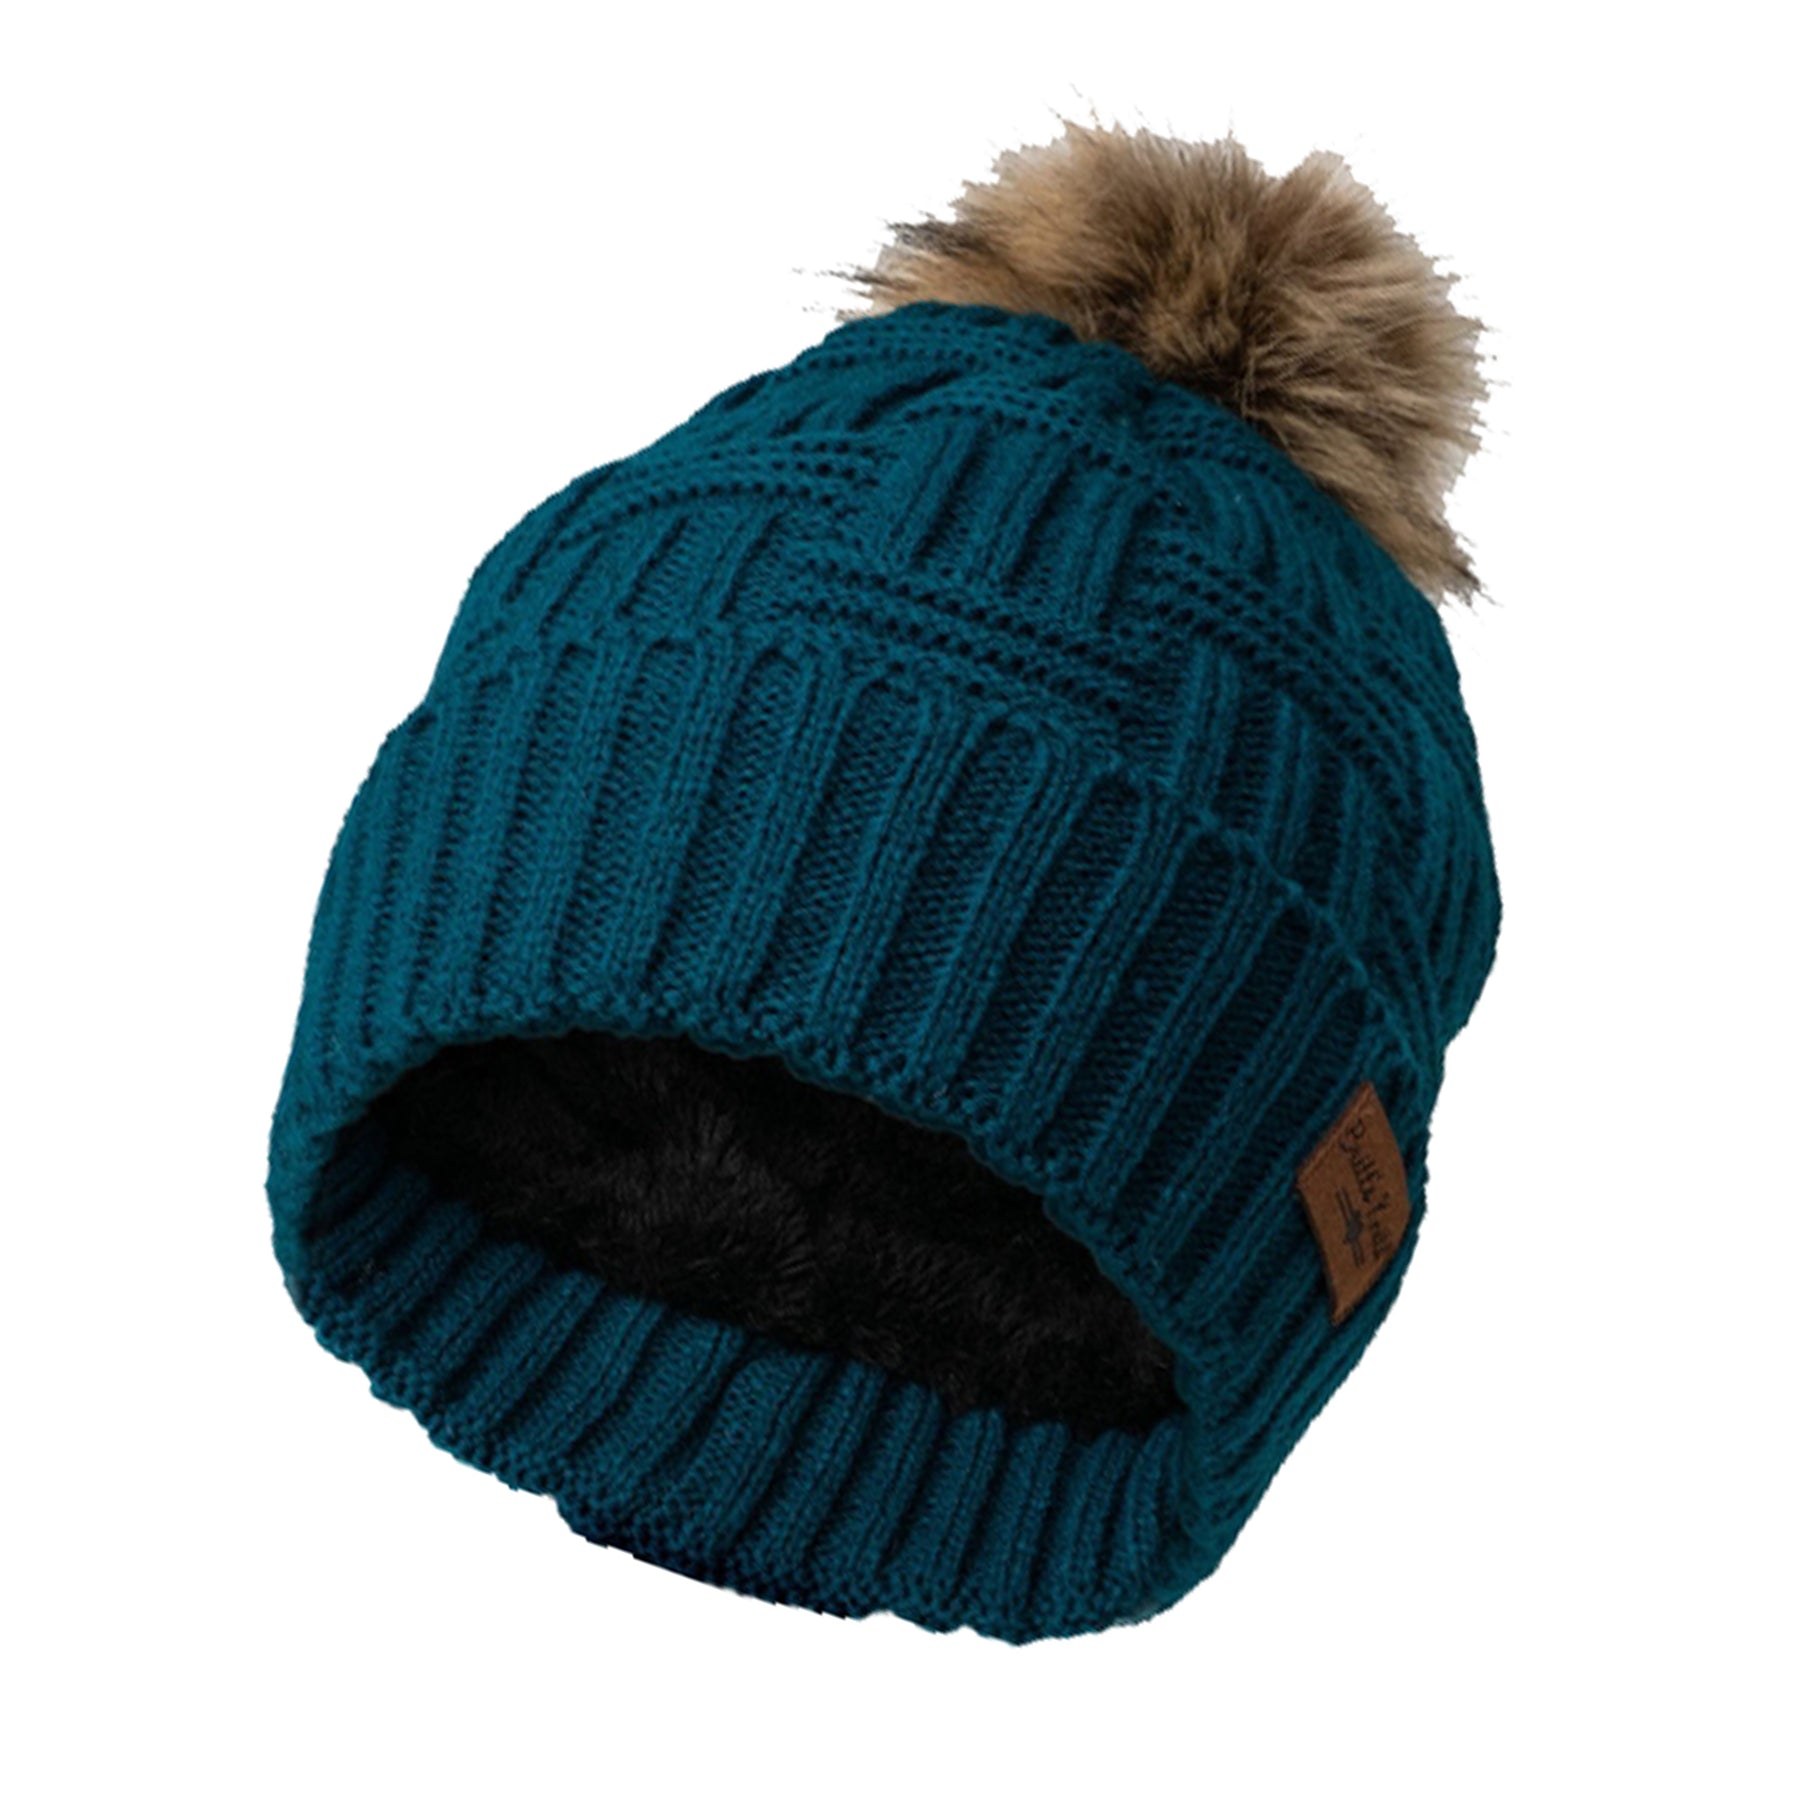 Britt's Knits Cozy Classics Pom Hat Winter Cozy Fur Pom Knit Beanie Hat  Skull Cap for Women & Girls